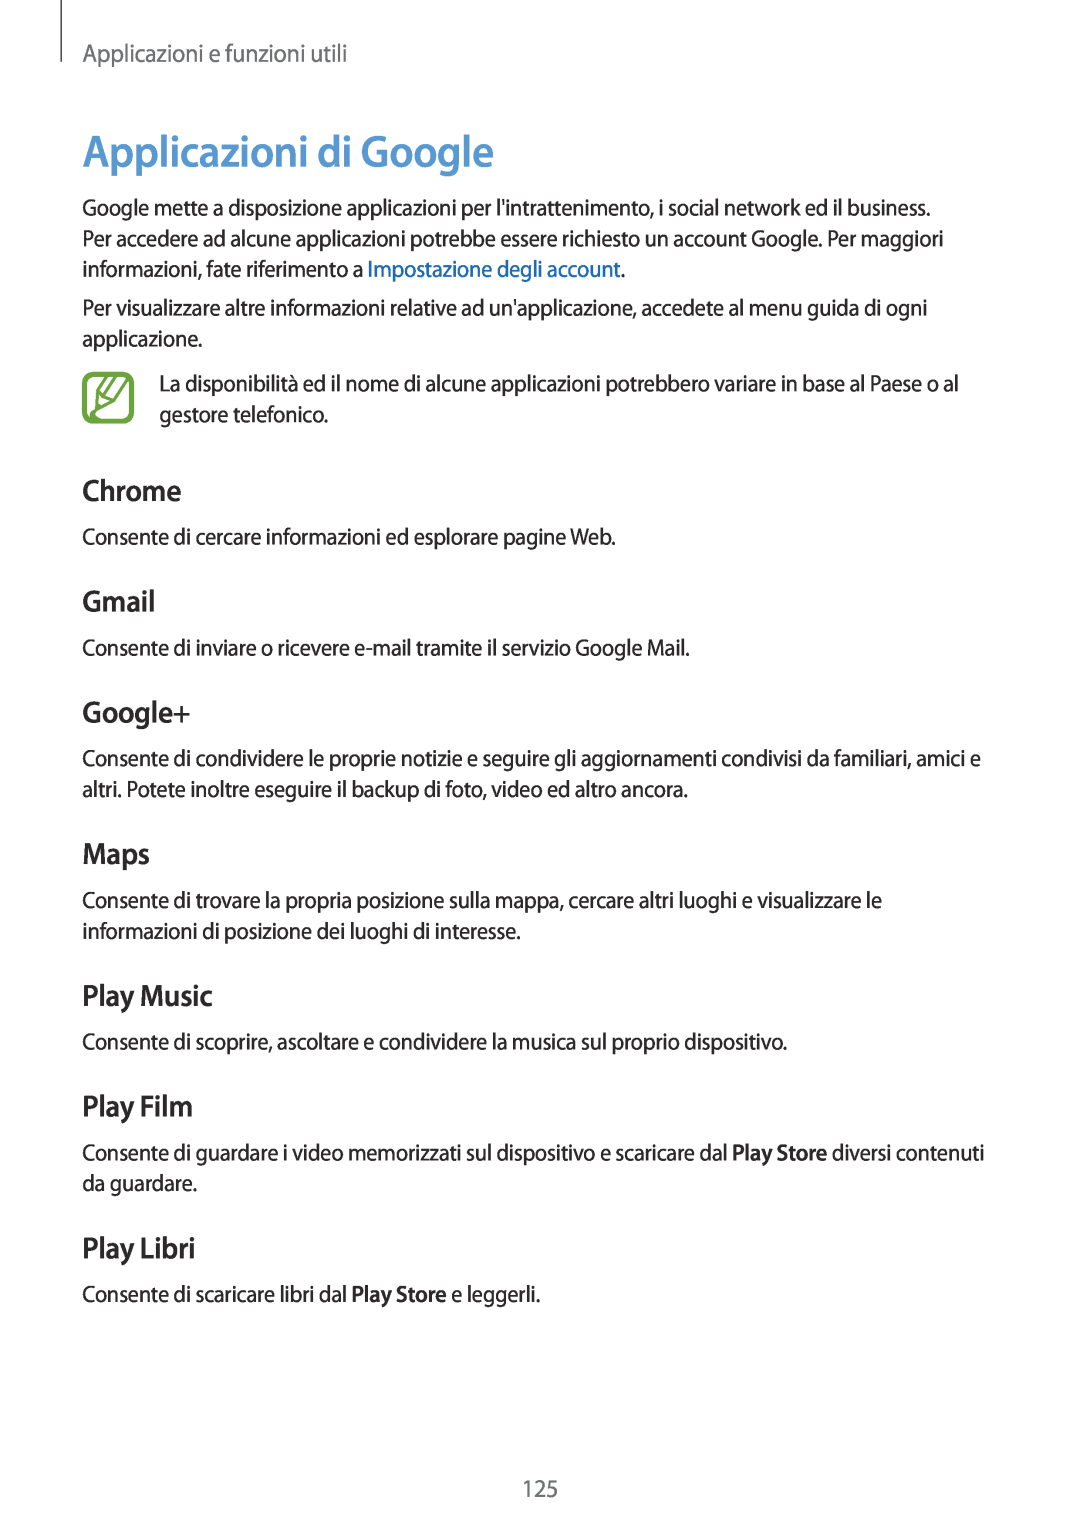 Samsung SM-T700NZWATUR manual Applicazioni di Google, Chrome, Gmail, Google+, Maps, Play Music, Play Film, Play Libri 